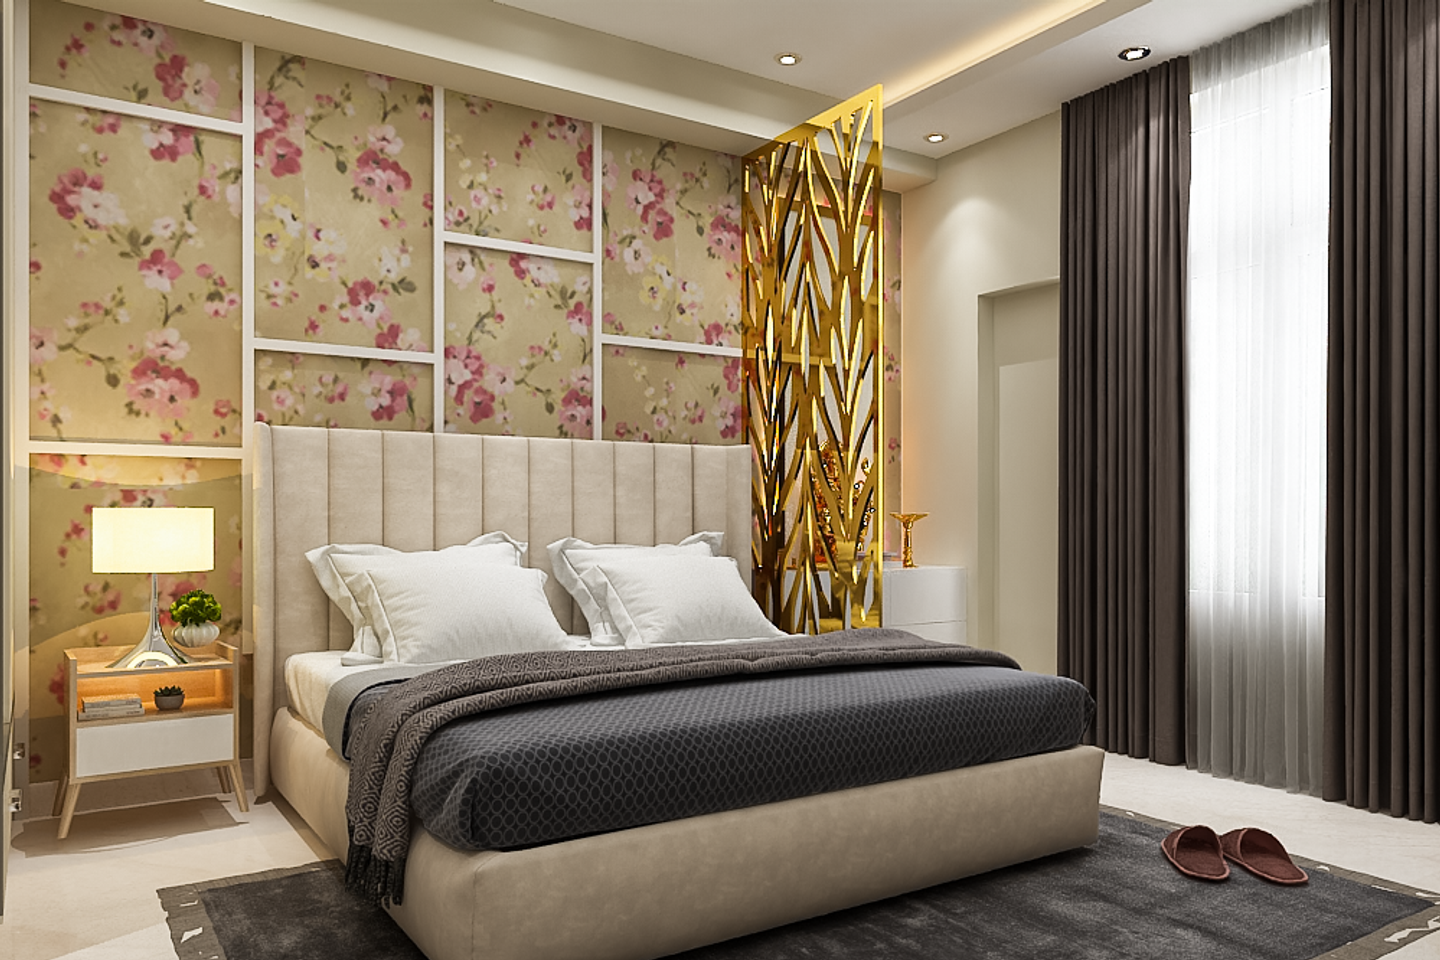 Guest Bedroom Design With Pooja Unit - Livspace